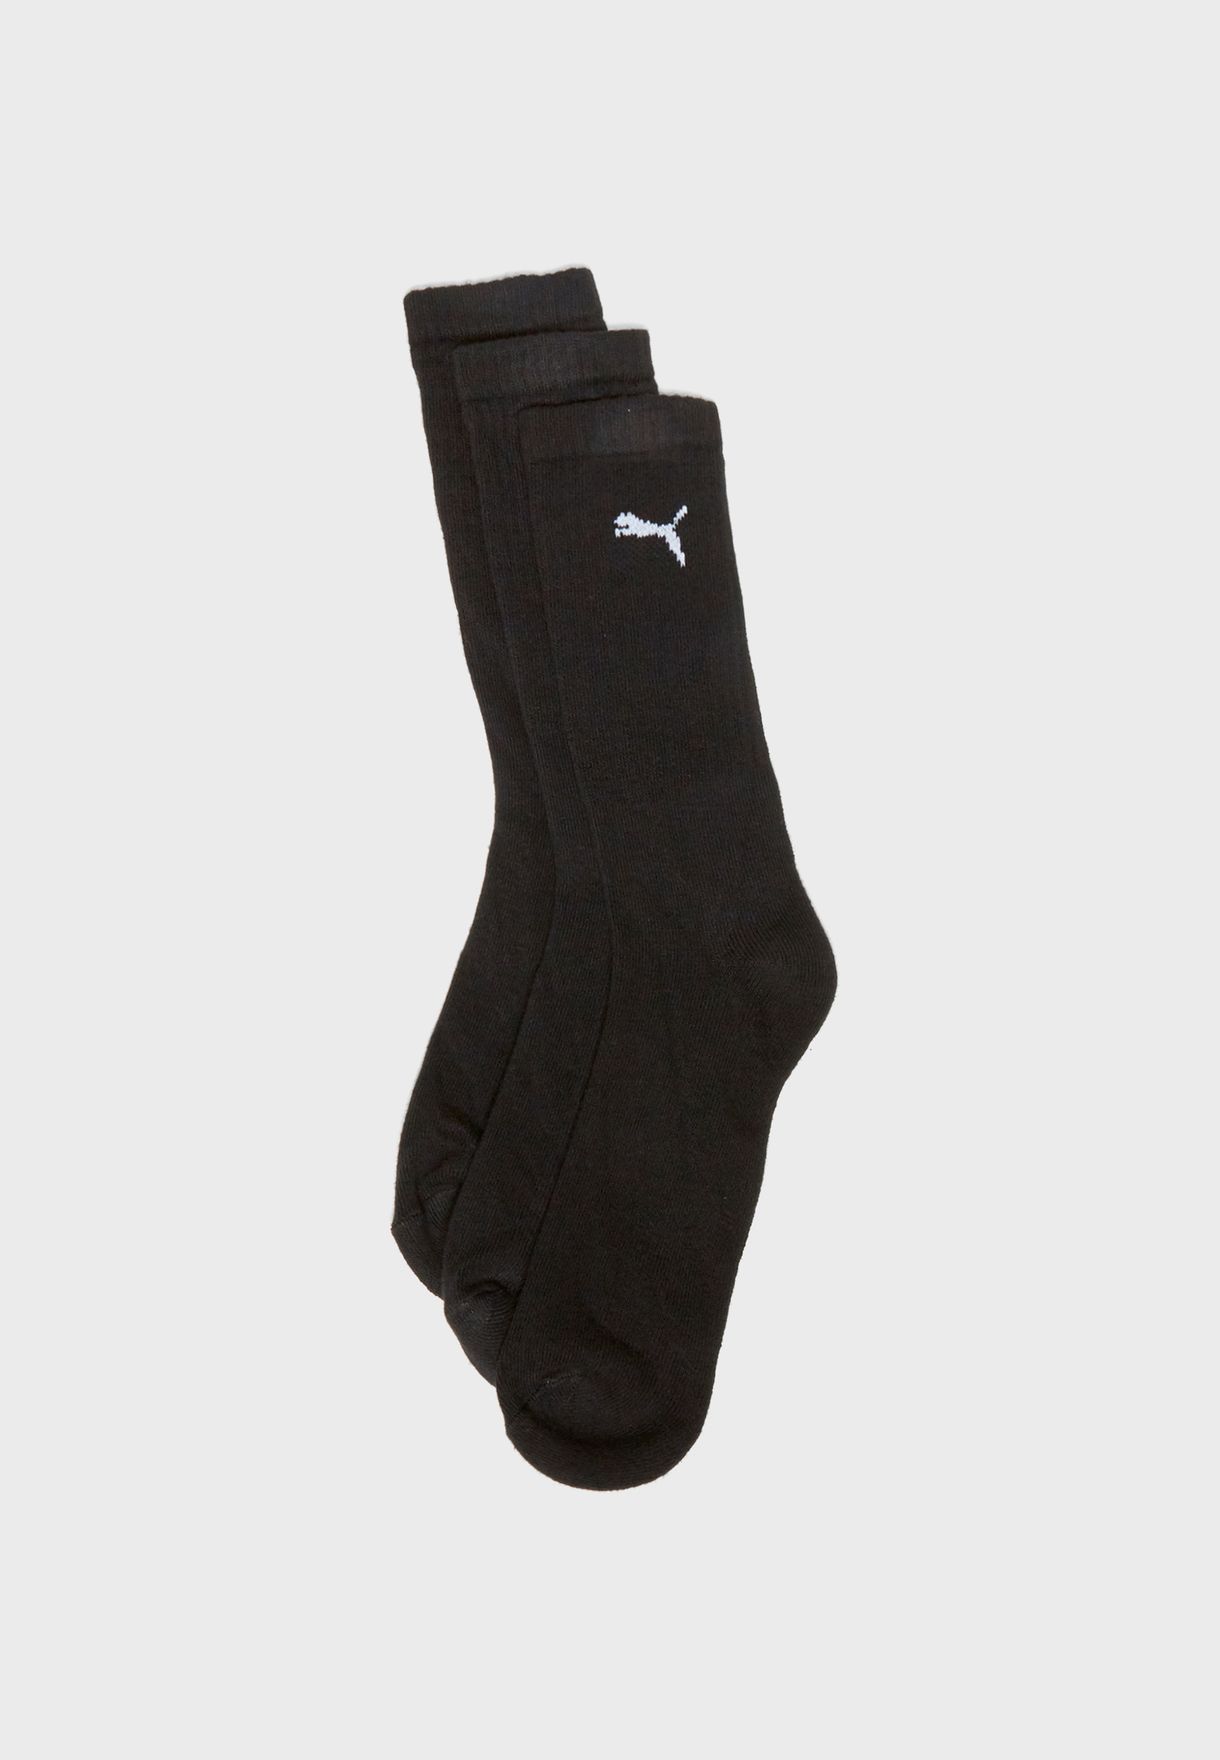 buy puma socks